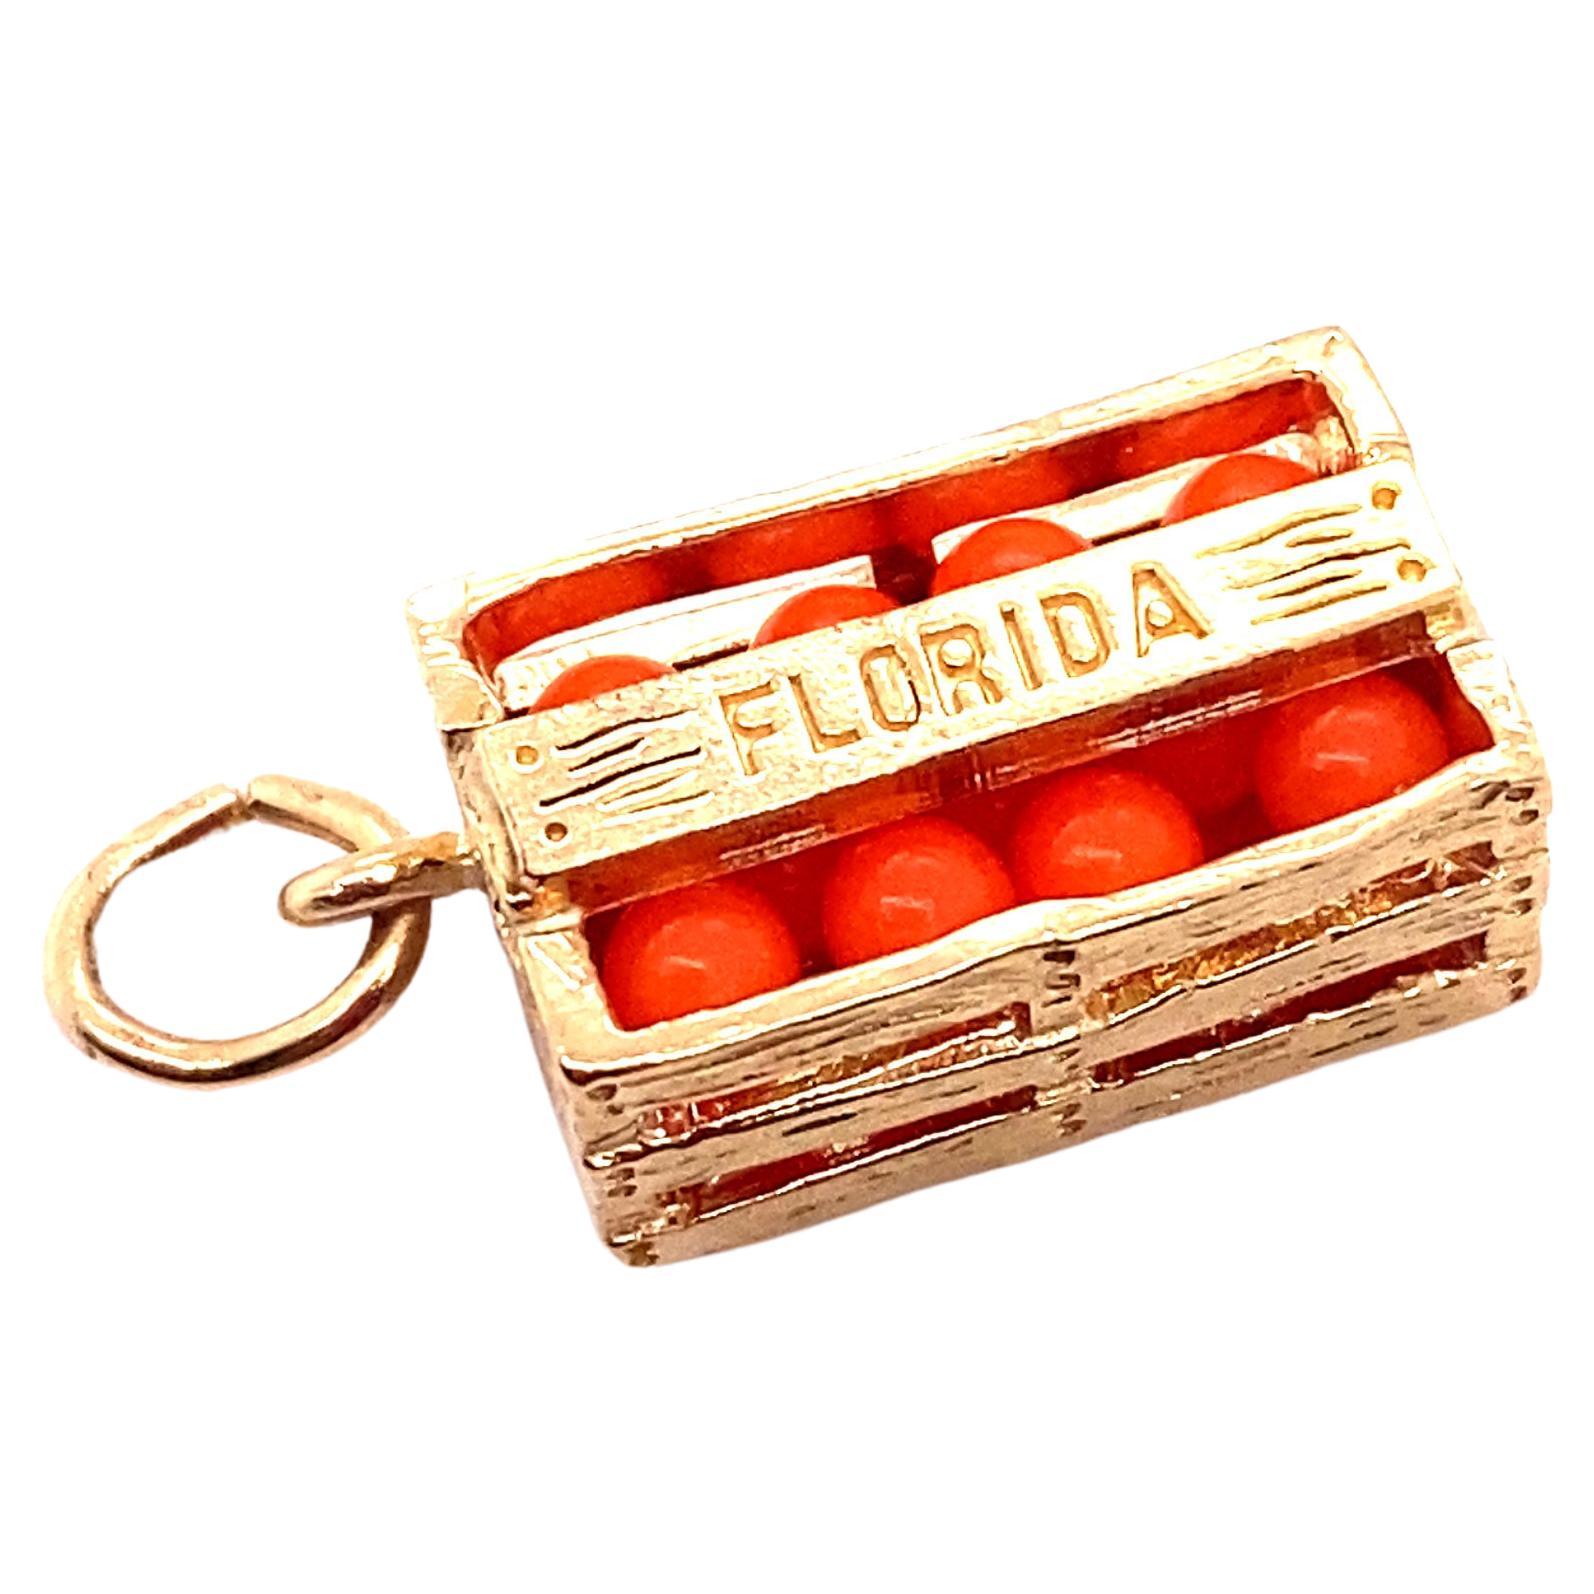 Circa 1980s Florida Oranges Crate Charm in 14K Gold